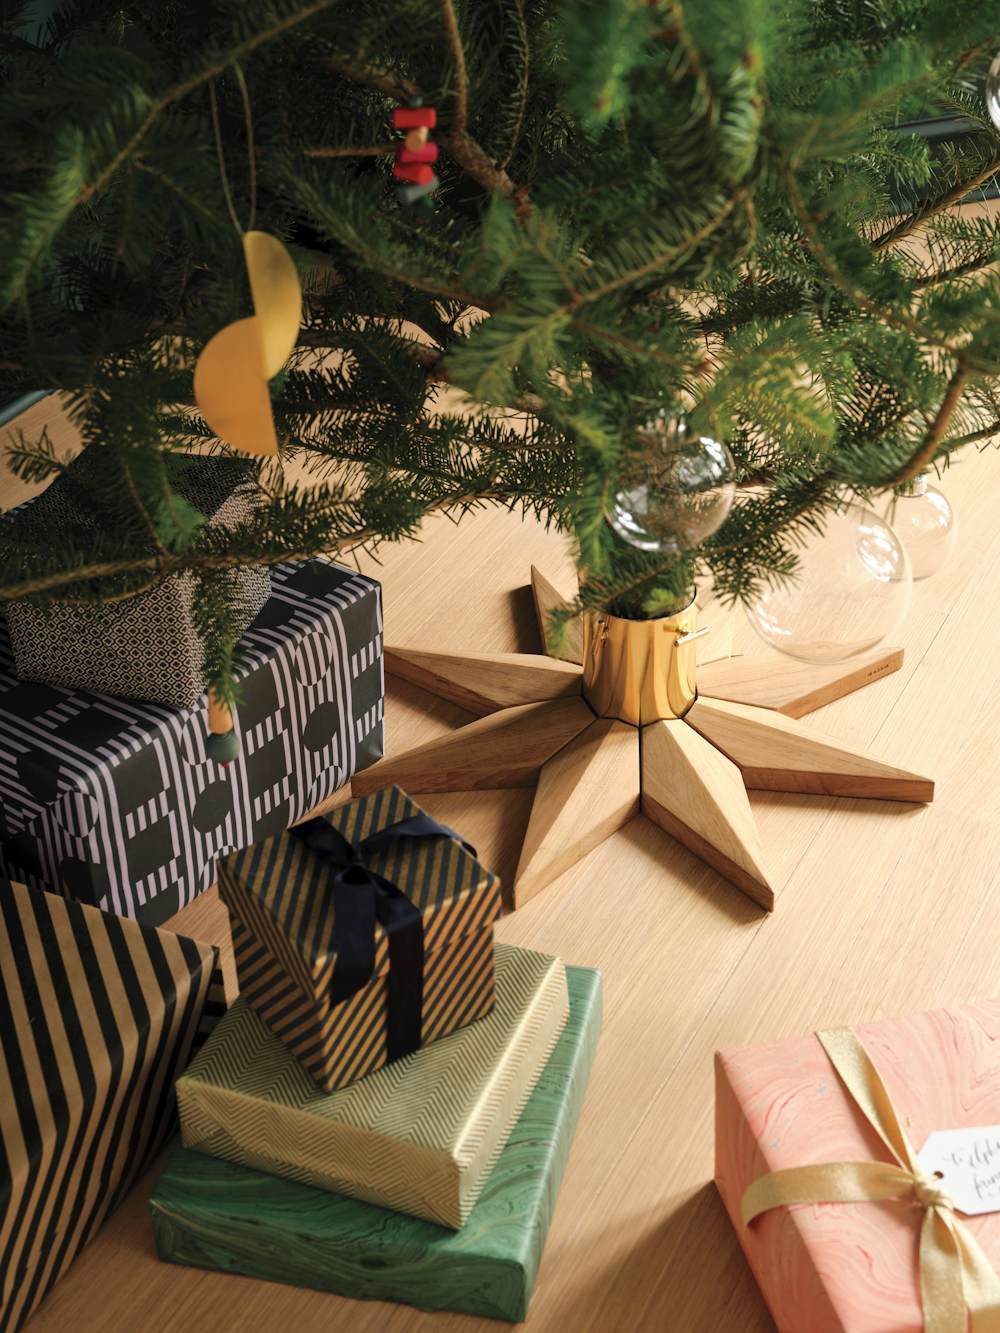 Holiday scene - Christmas tree and gift